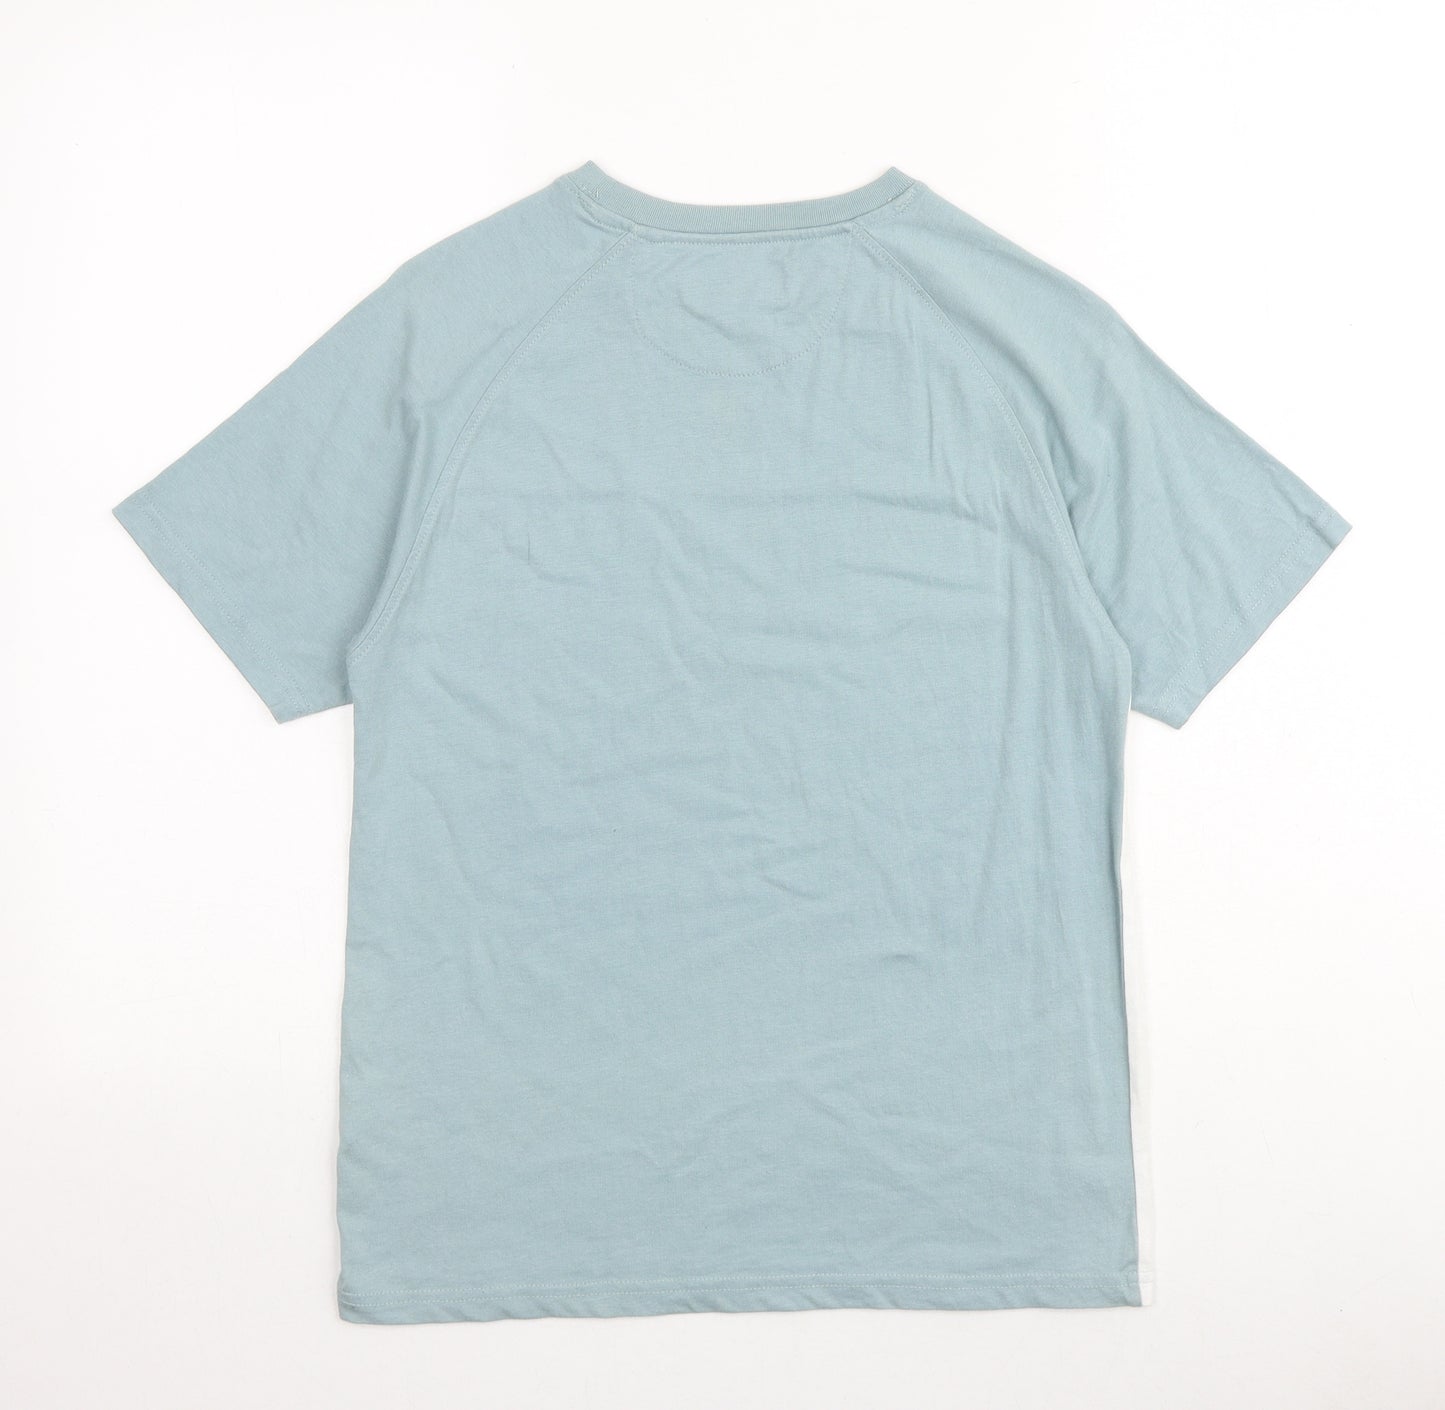 McKenzie Boys Blue Colourblock 100% Cotton Pullover T-Shirt Size 12-13 Years Round Neck Pullover